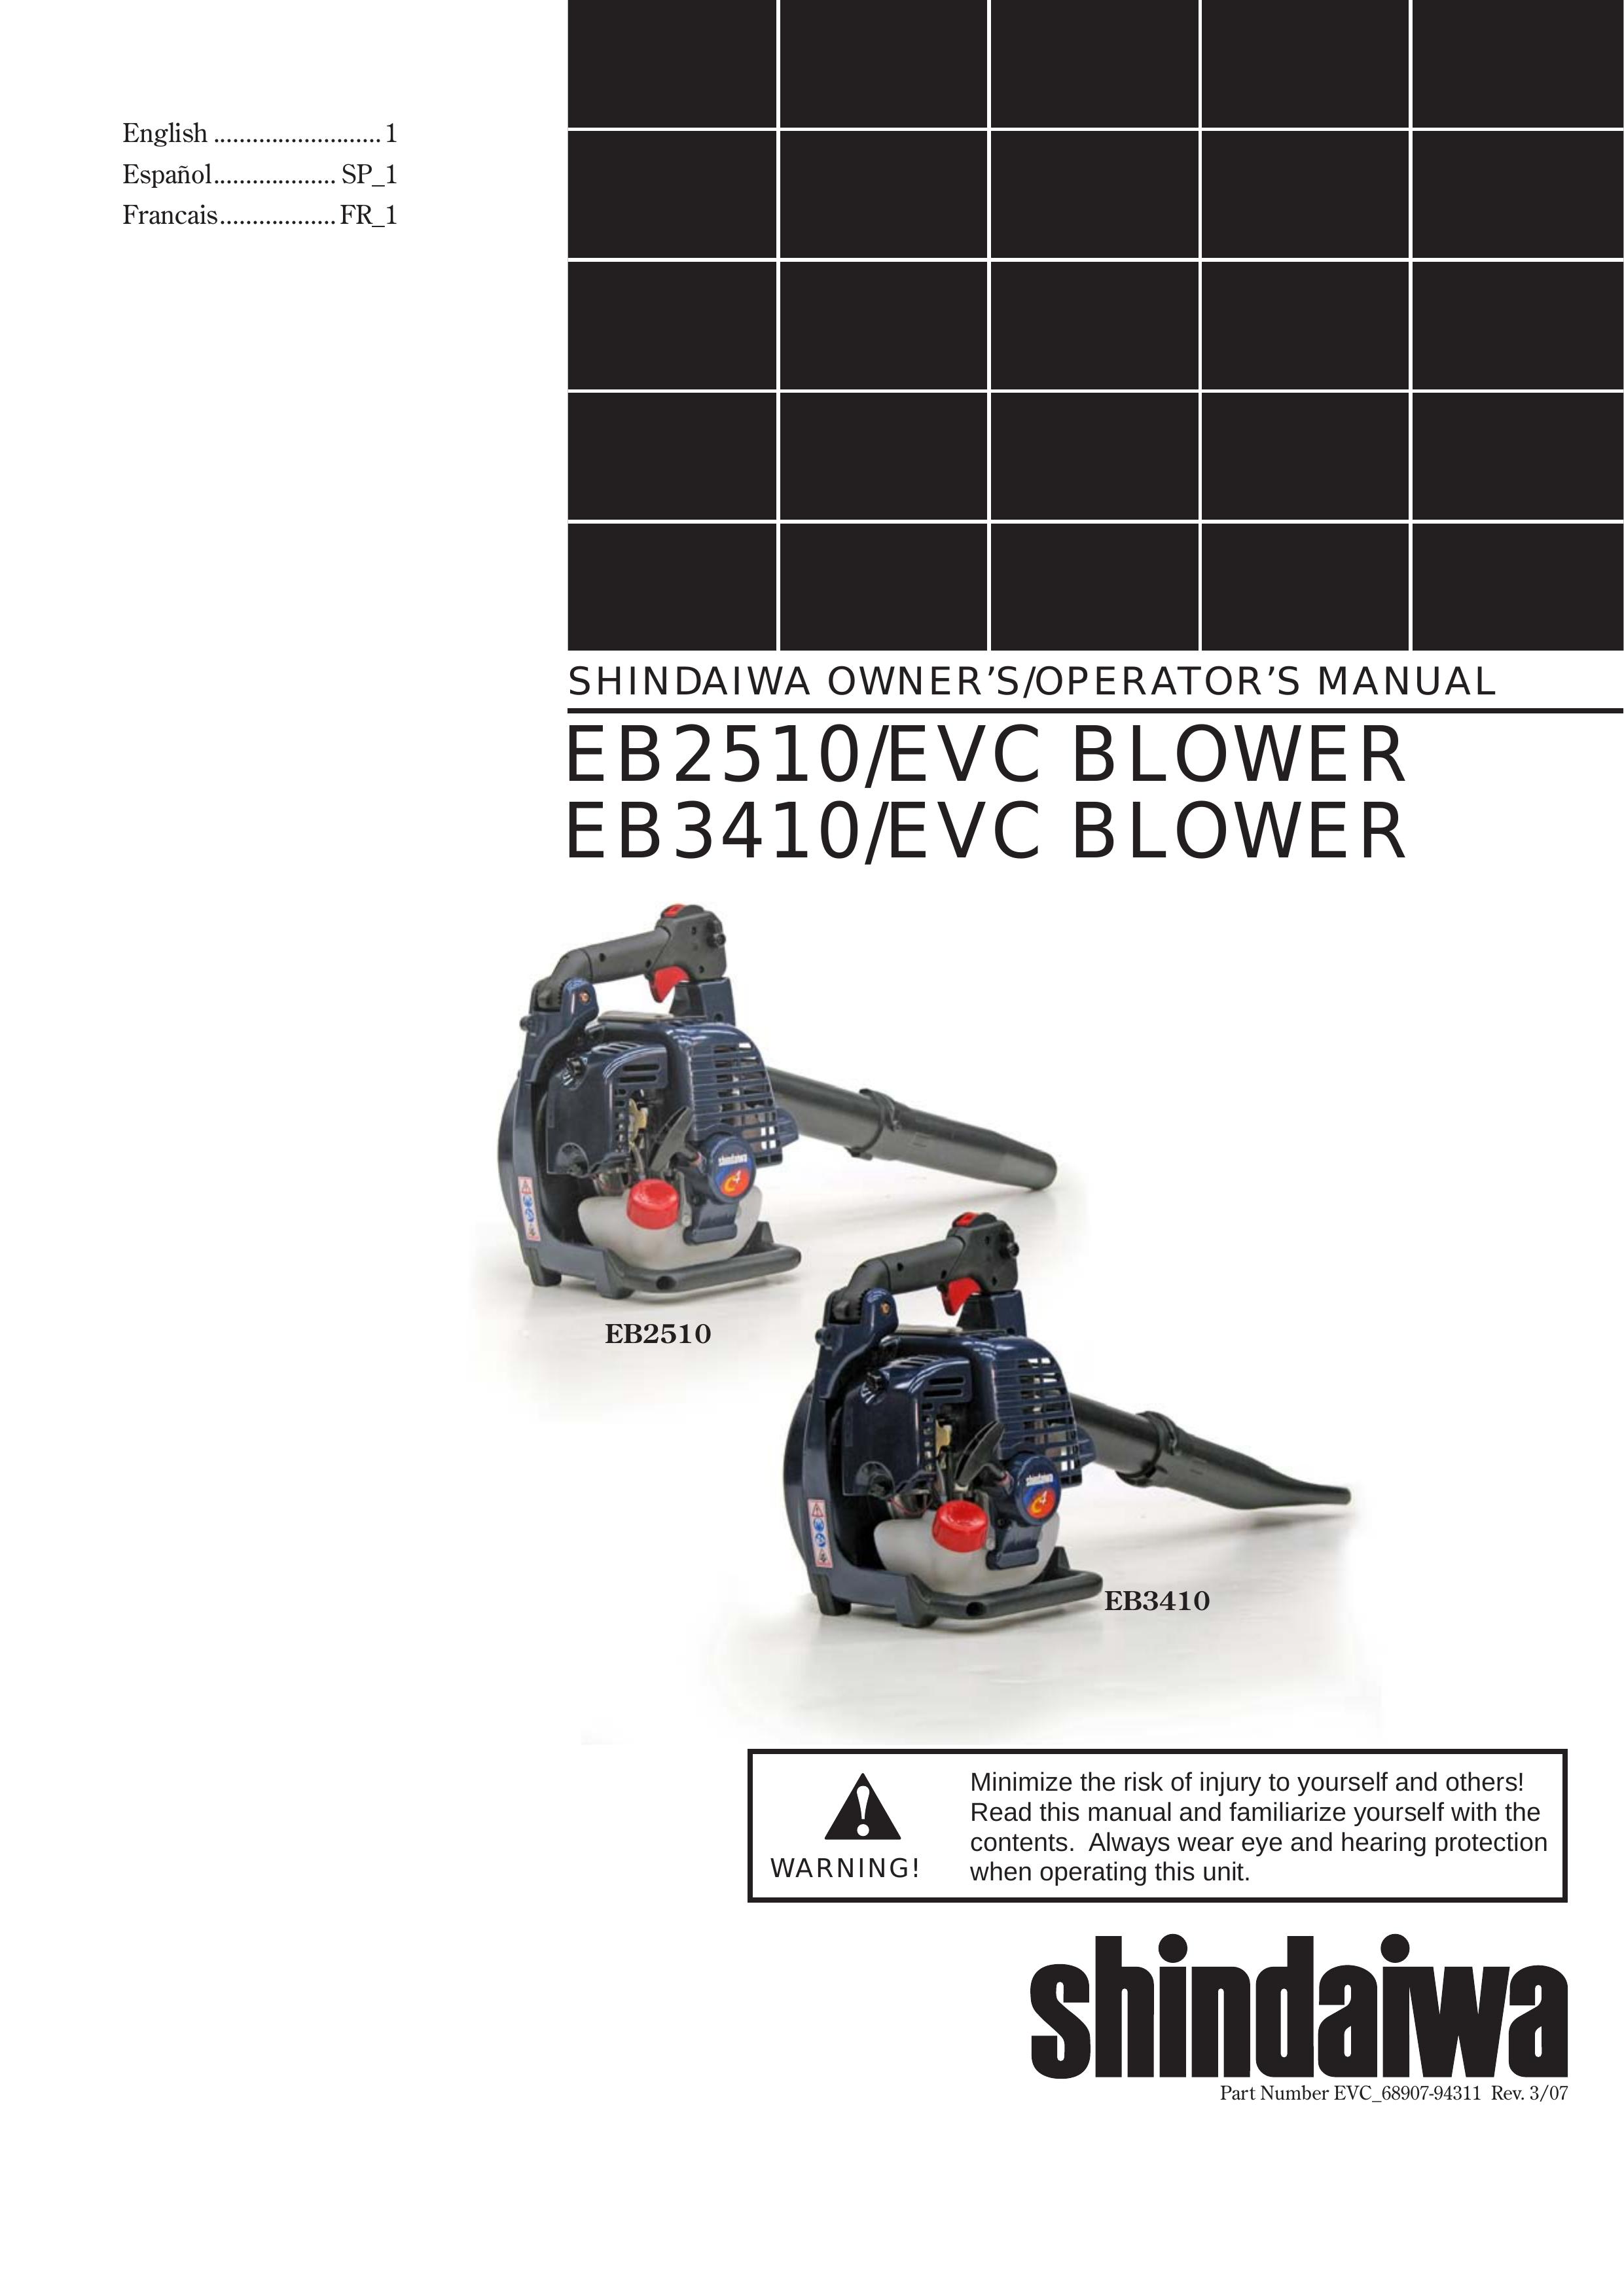 Shindaiwa EB3410/EVC Blower User Manual